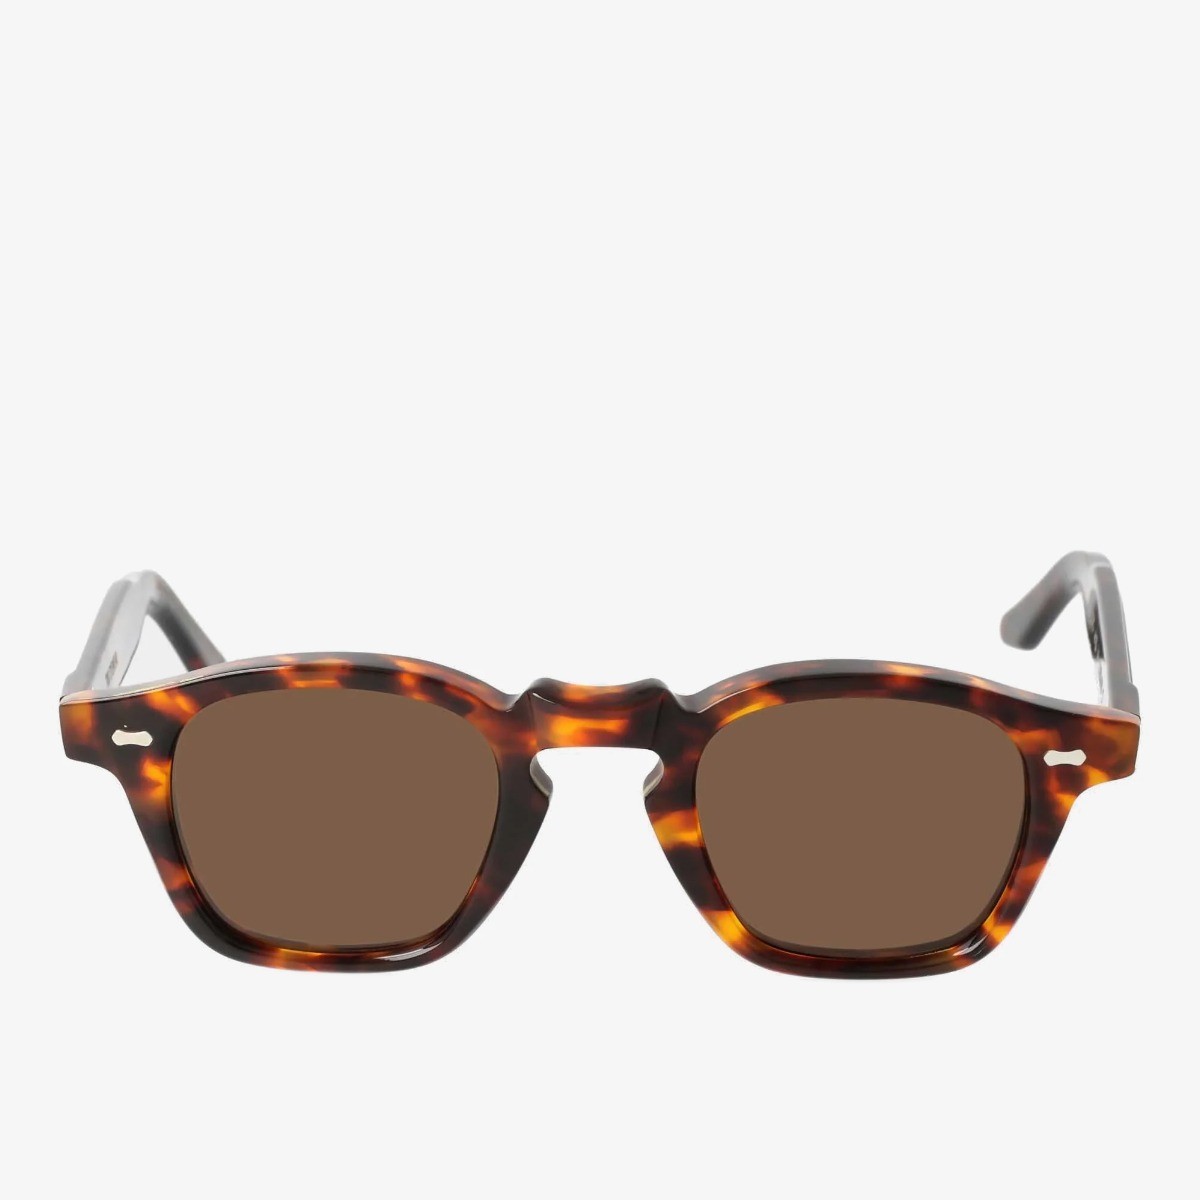 TBD Eyewear Cord brown frame brown lenses sunglasses